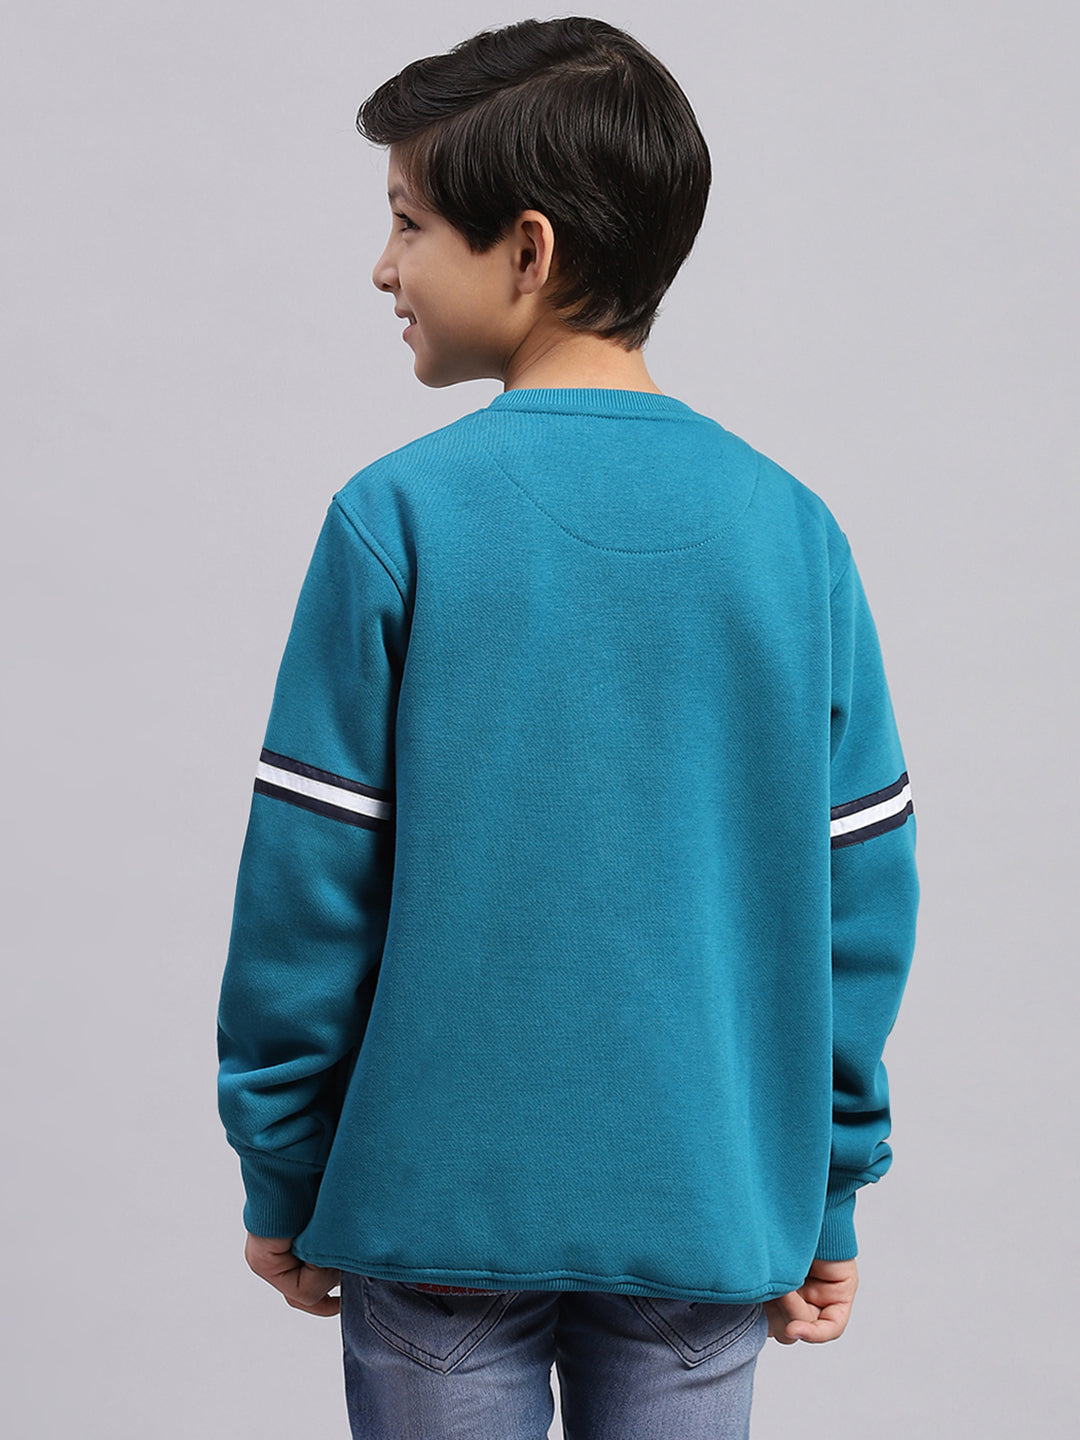 Boys Teal Blue Printed Round Neck Full Sleeve Sweatshirt